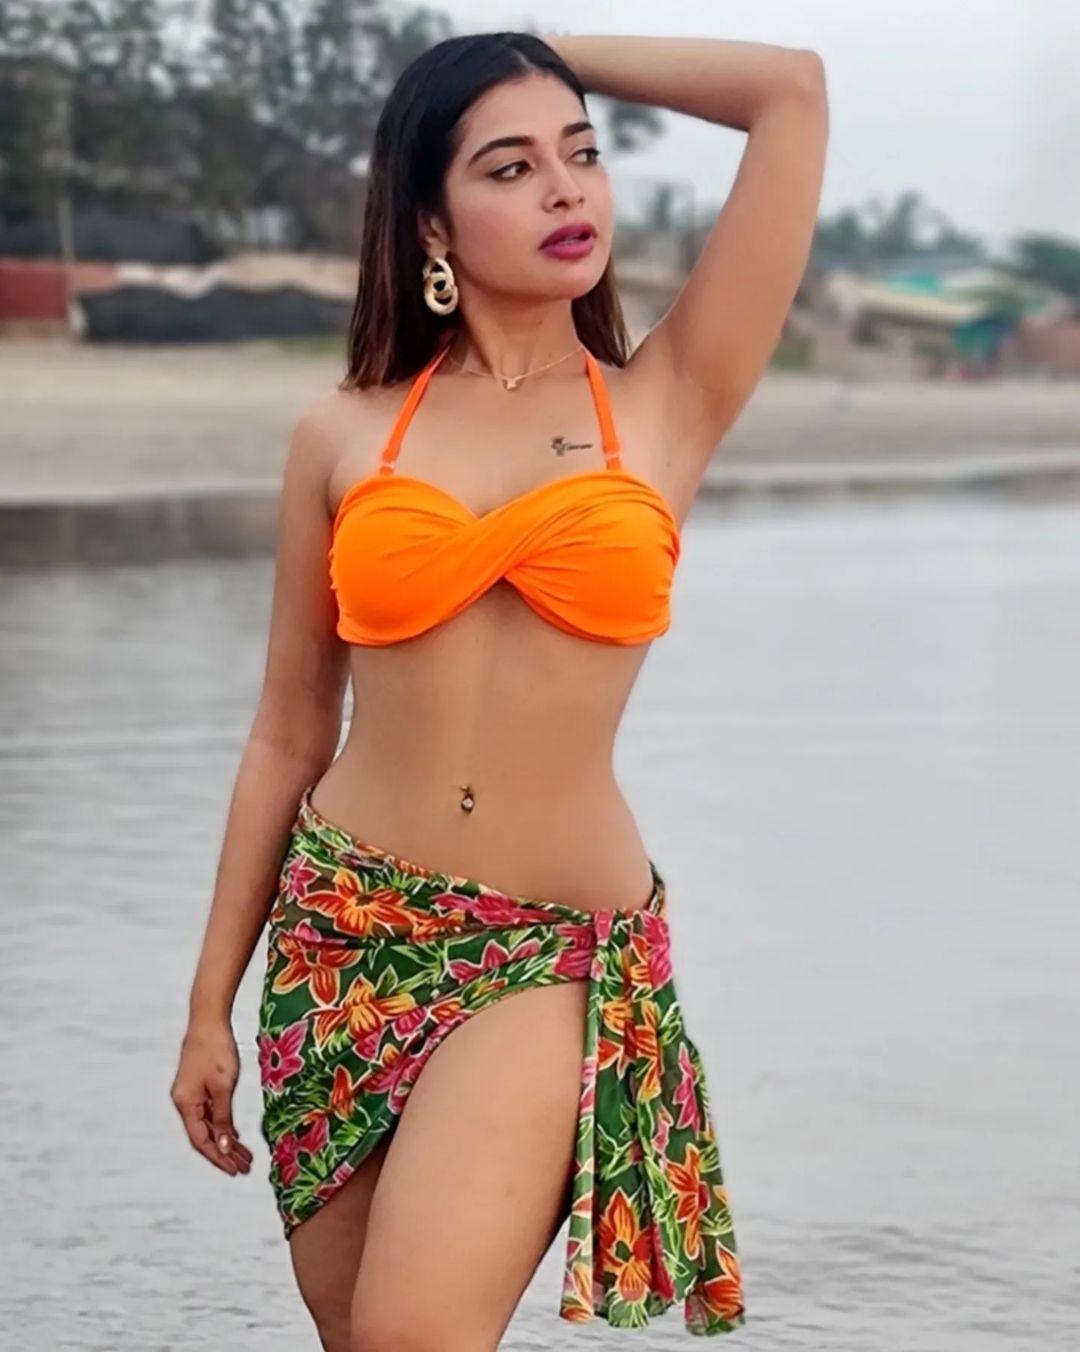 dharsha gupta hot photos in bikini dress getting viral on social media